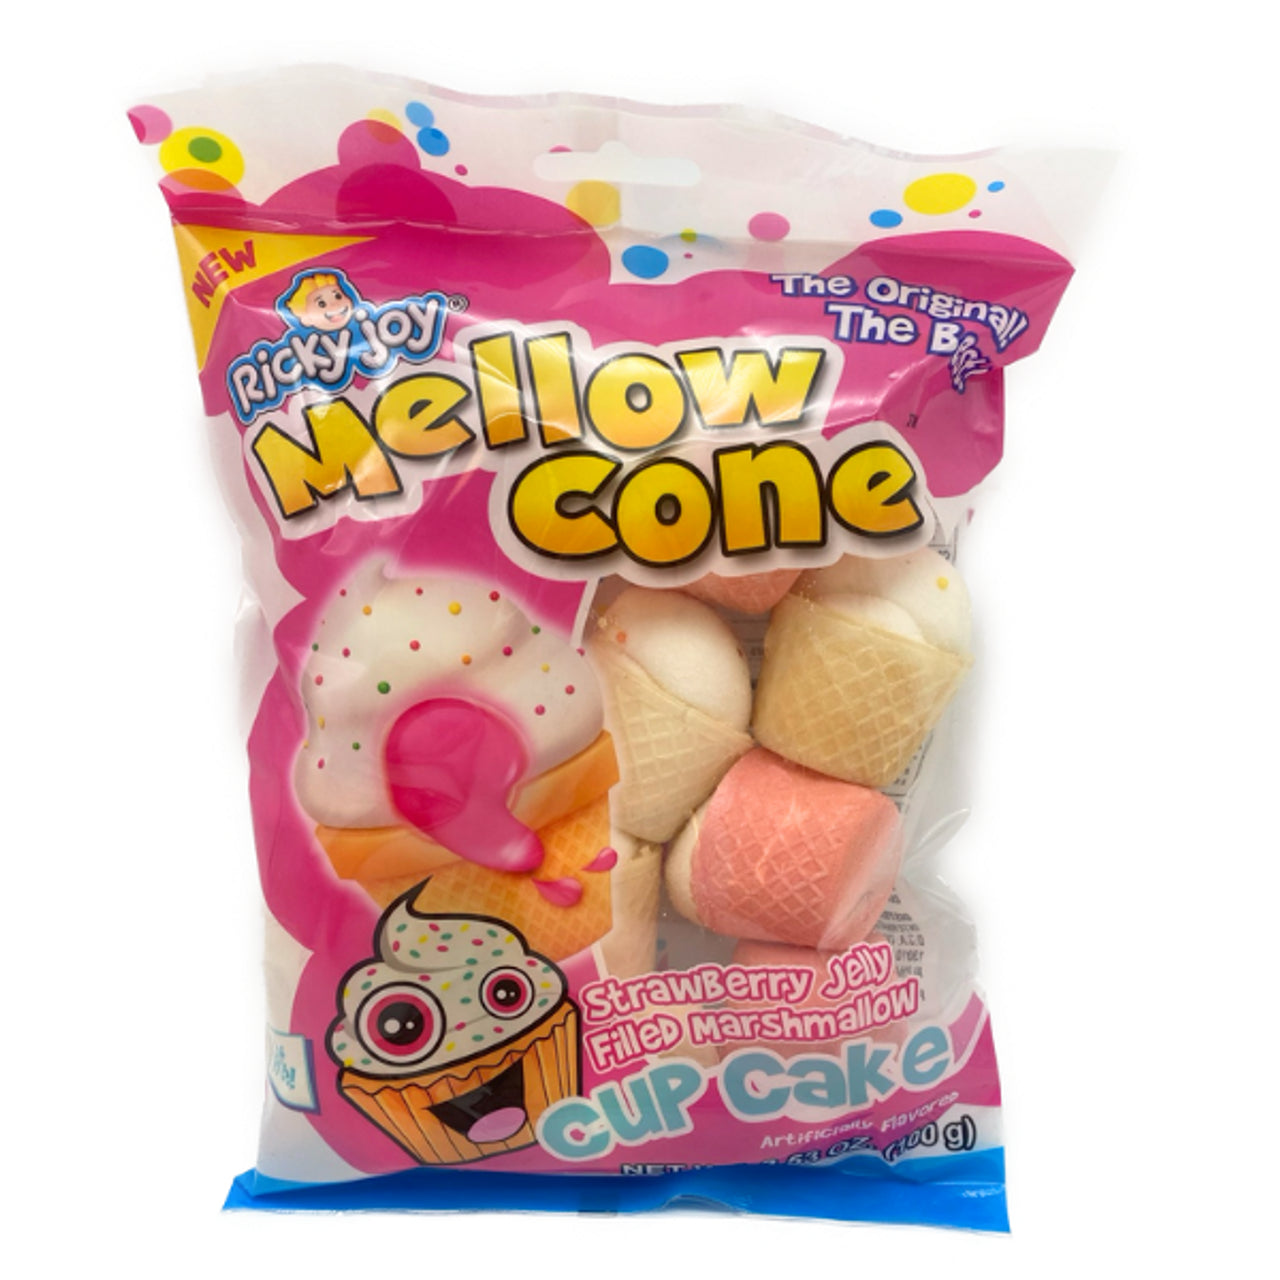 Ricky Joy Mellow Cone Strawberry Marshmallow Cupcake